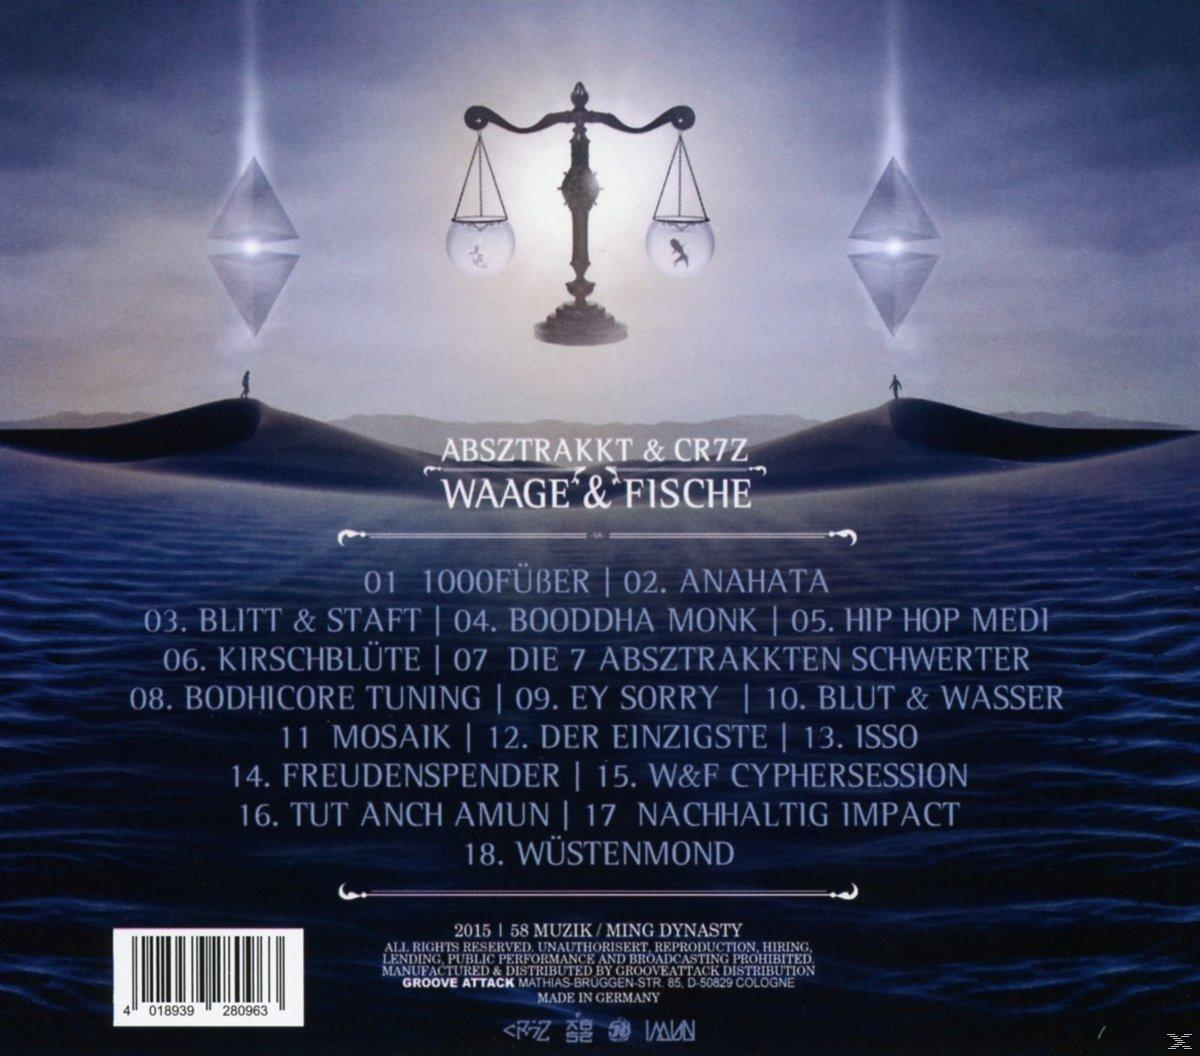 Fische - & Cr7z (CD) Waage & - Absztrakkt